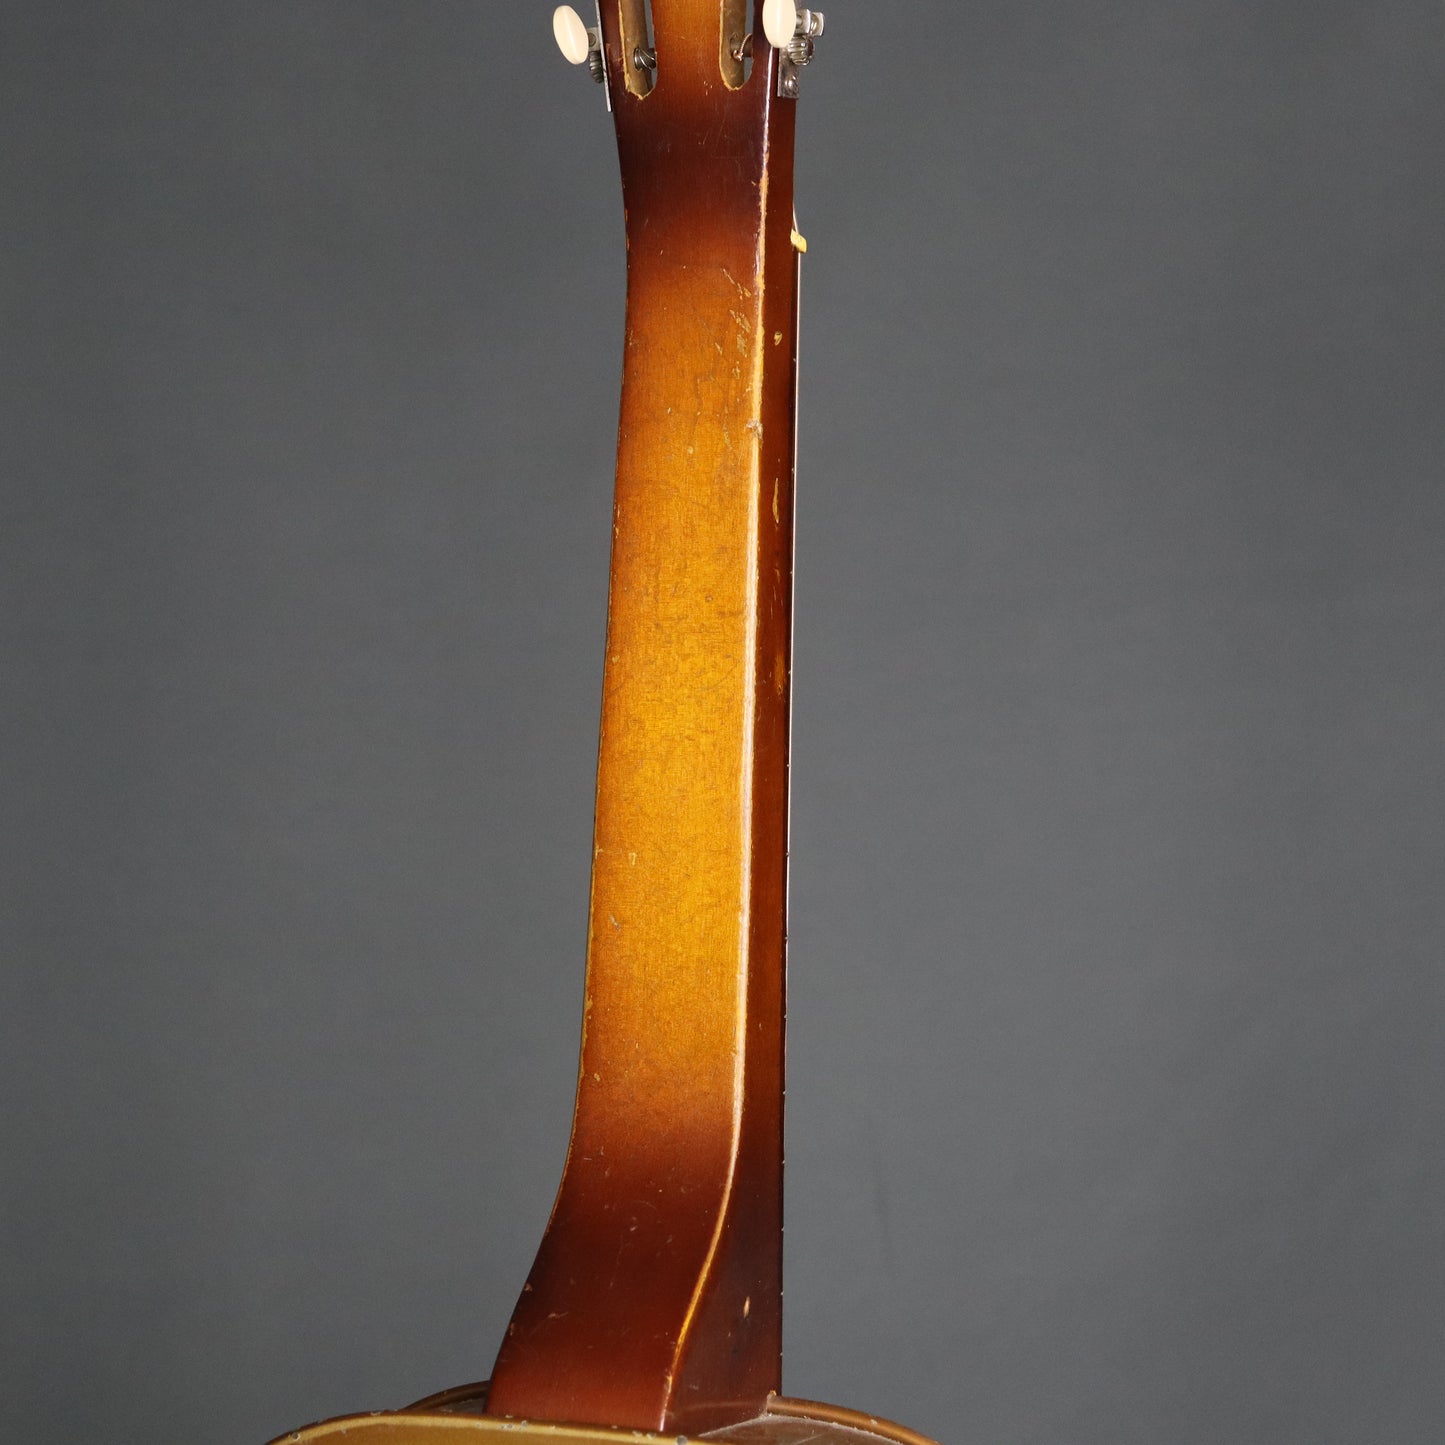 1935 Dobro Fiddle Edge Model 32 Square Neck Guitar Resonator Lap Steel Hawaiian M32 M-32